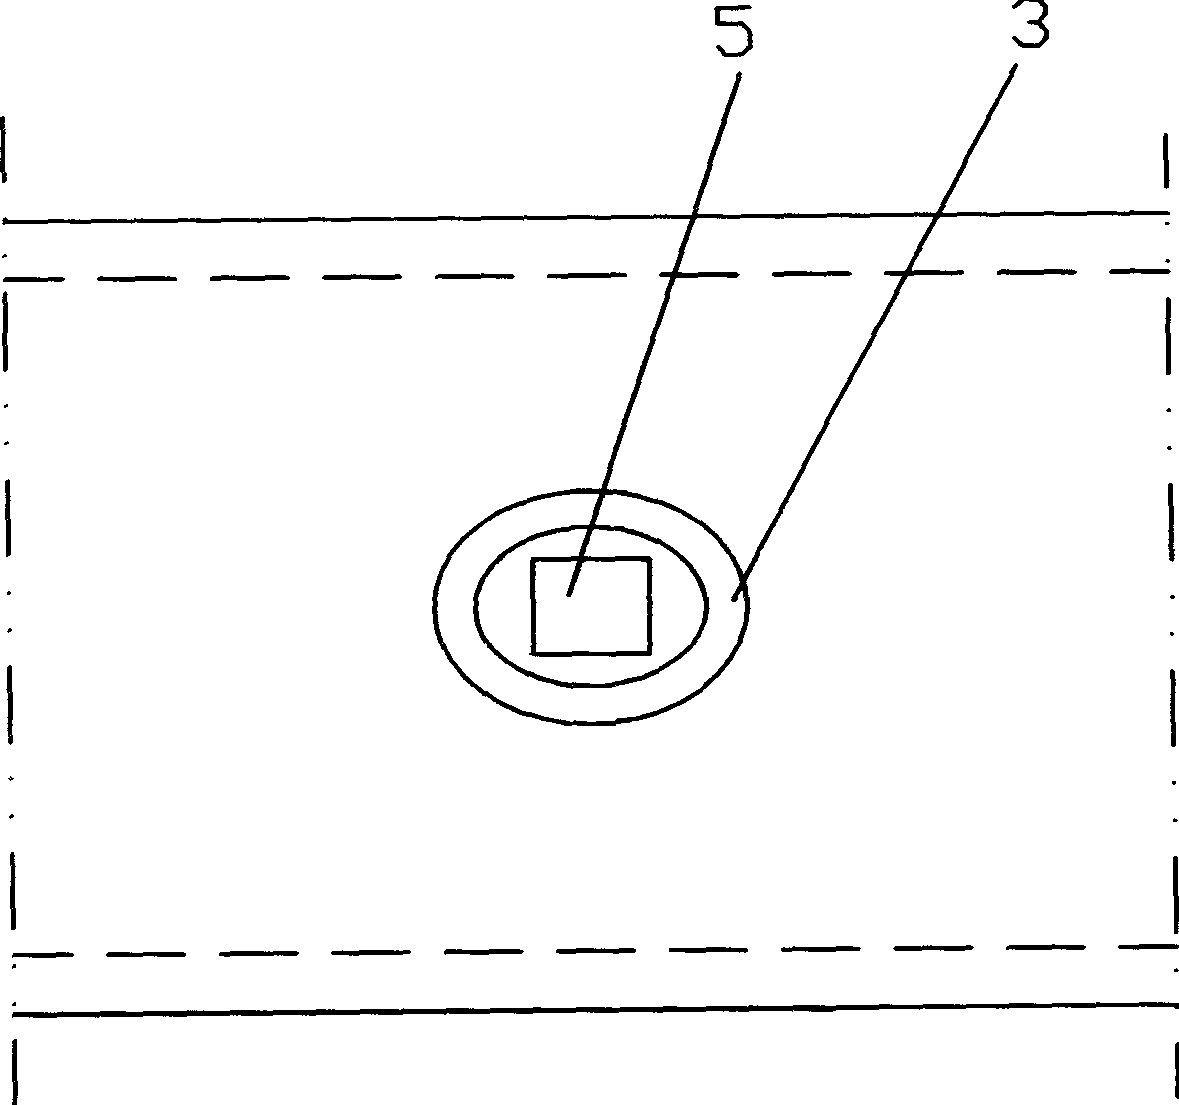 Foil gange deep sea insulation method and device